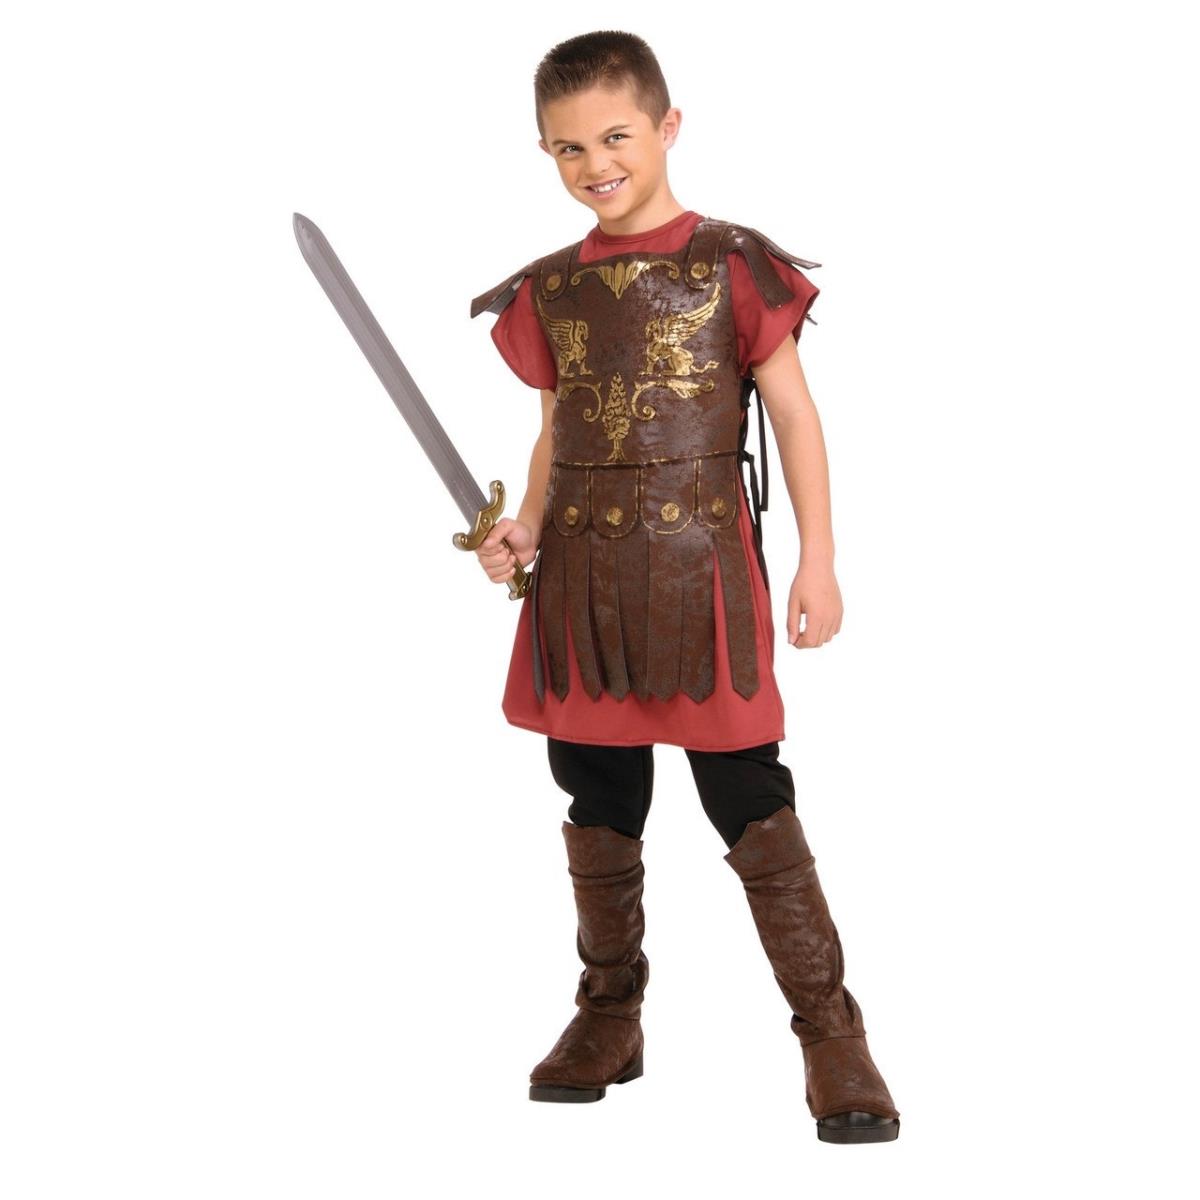 286787 Gladiator Kids Costume, Large